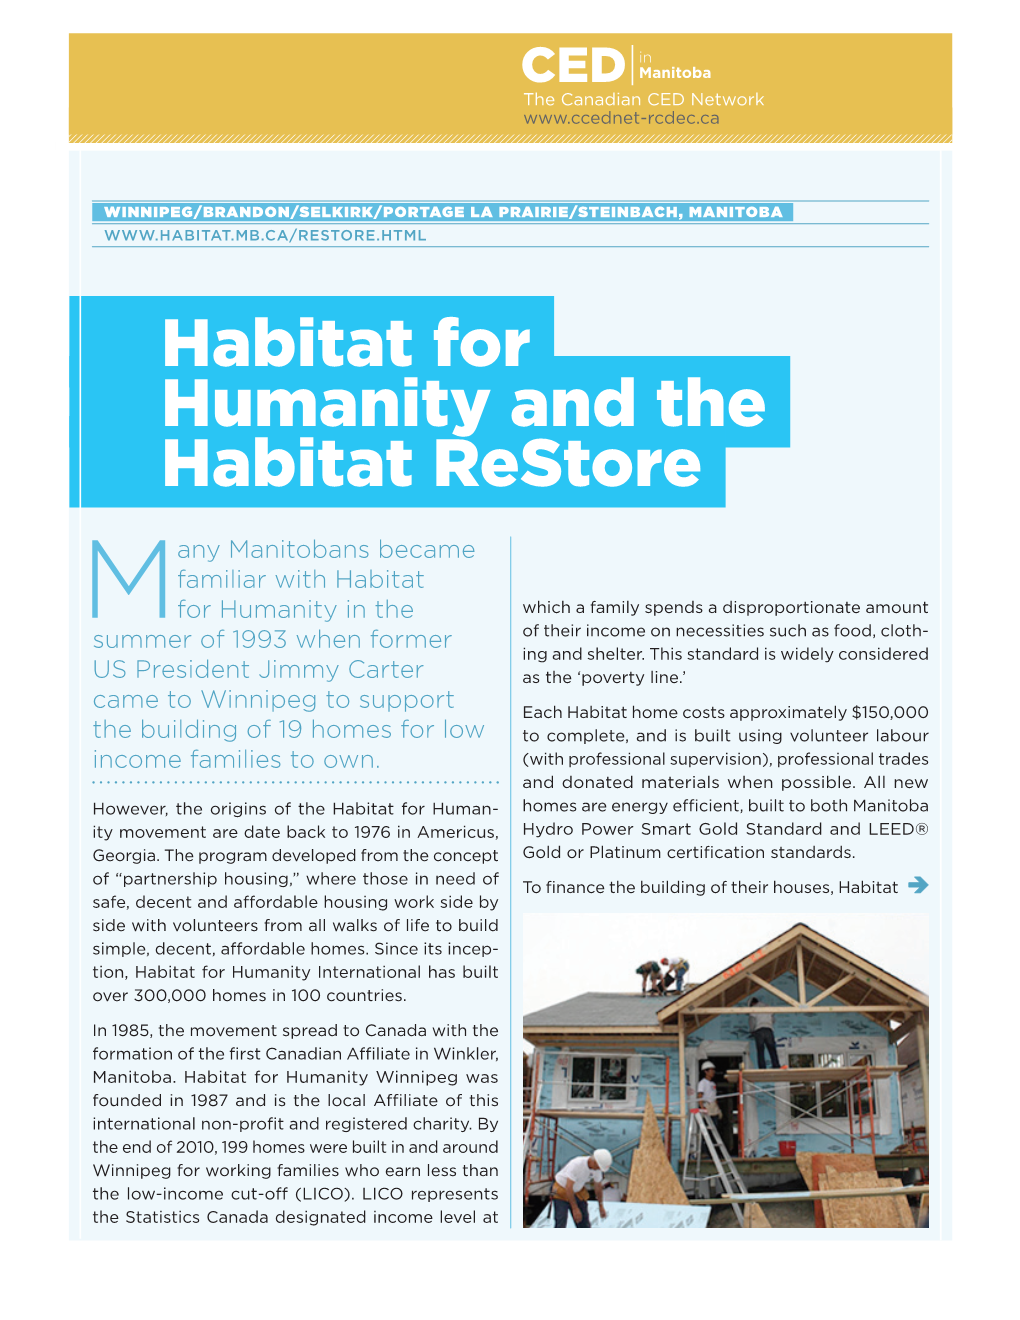 Habitat for Humanity and the Habitat Restore